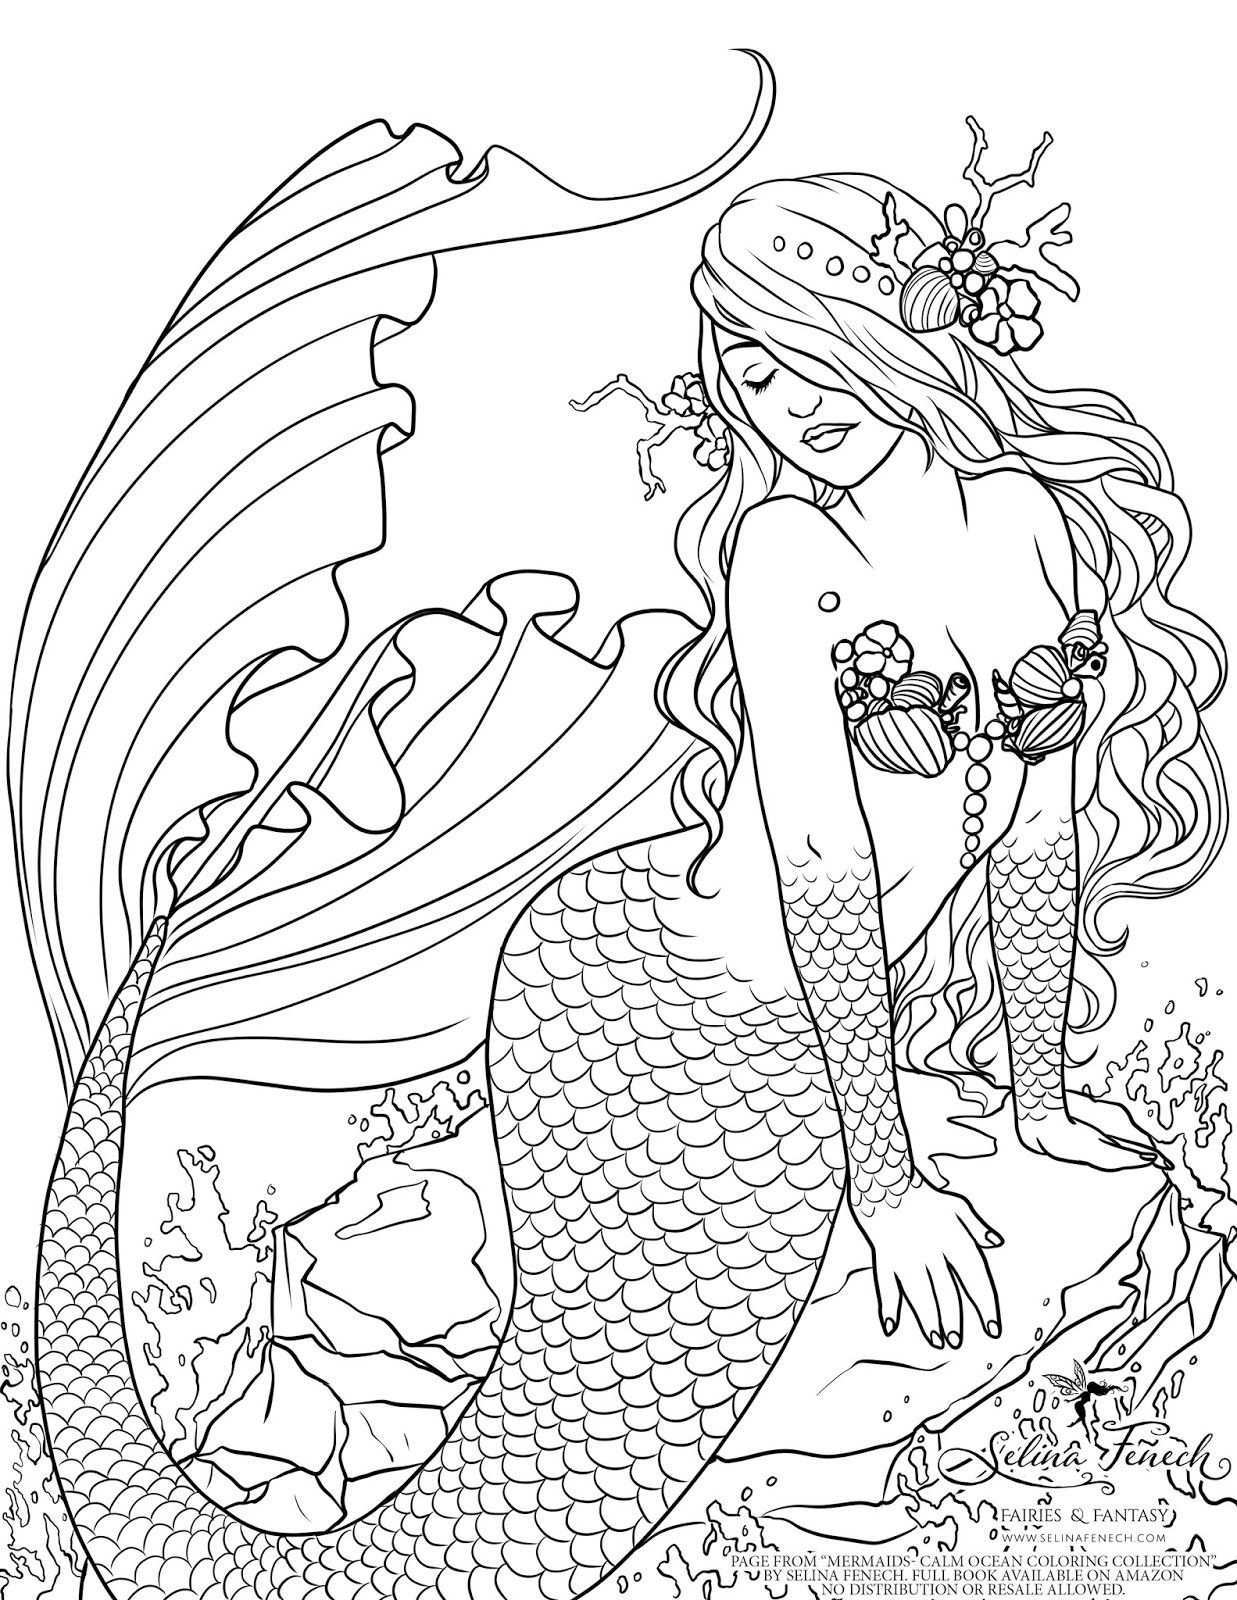 Frisch Ausmalbilder Meerjungfrau Kostenlos Malvorlagen Malvorlagenfurkinder Malvorlagenfur Mermaid Coloring Pages Mermaid Coloring Book Fairy Coloring Pages